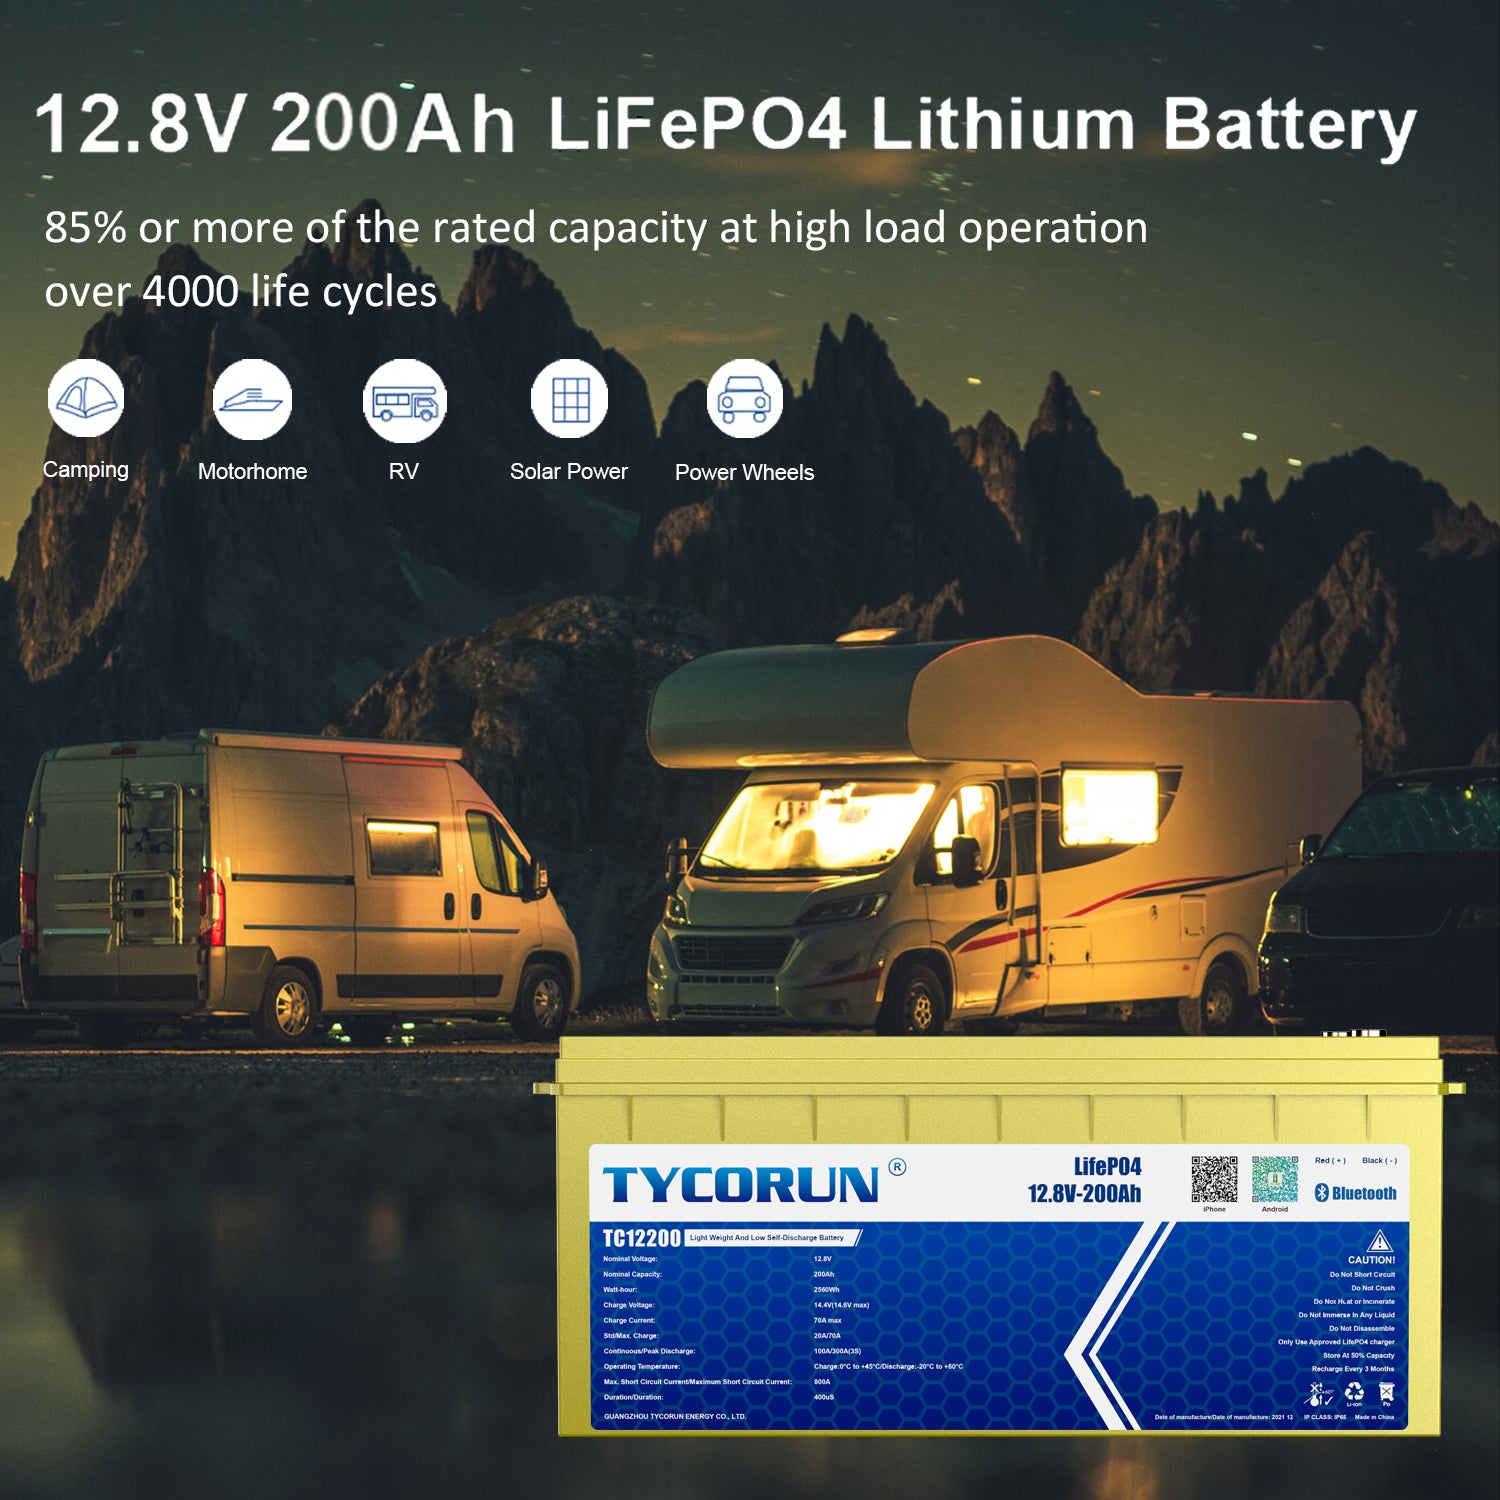 Smart Bluetooth 12V 100Ah Lithium Deep Cycle Battery-Tycorun Batteries